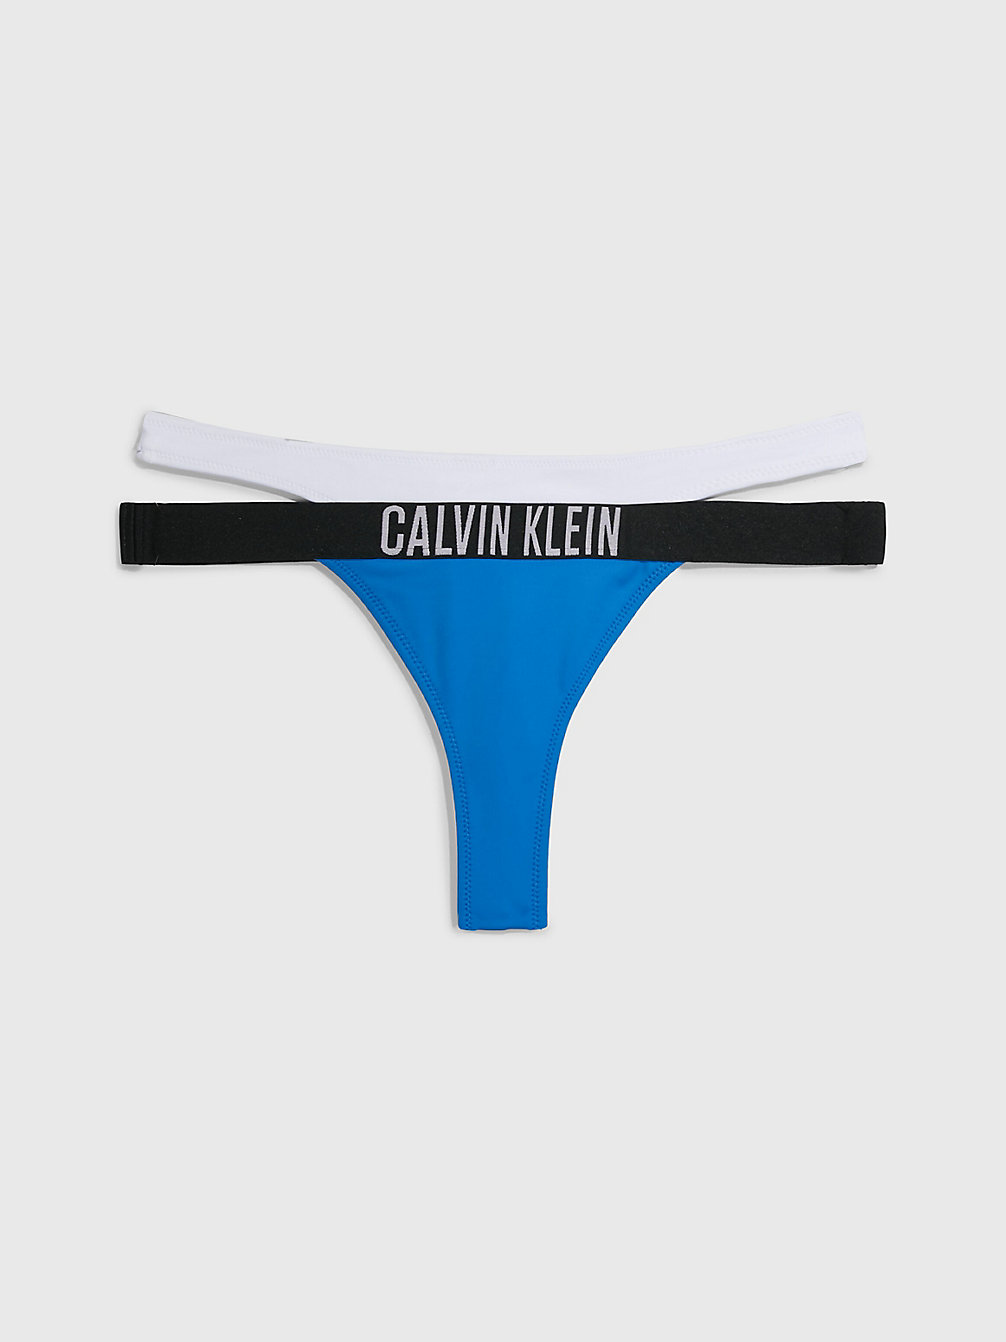 DYNAMIC BLUE > Thong Bikinihosen – Intense Power > undefined Damen - Calvin Klein